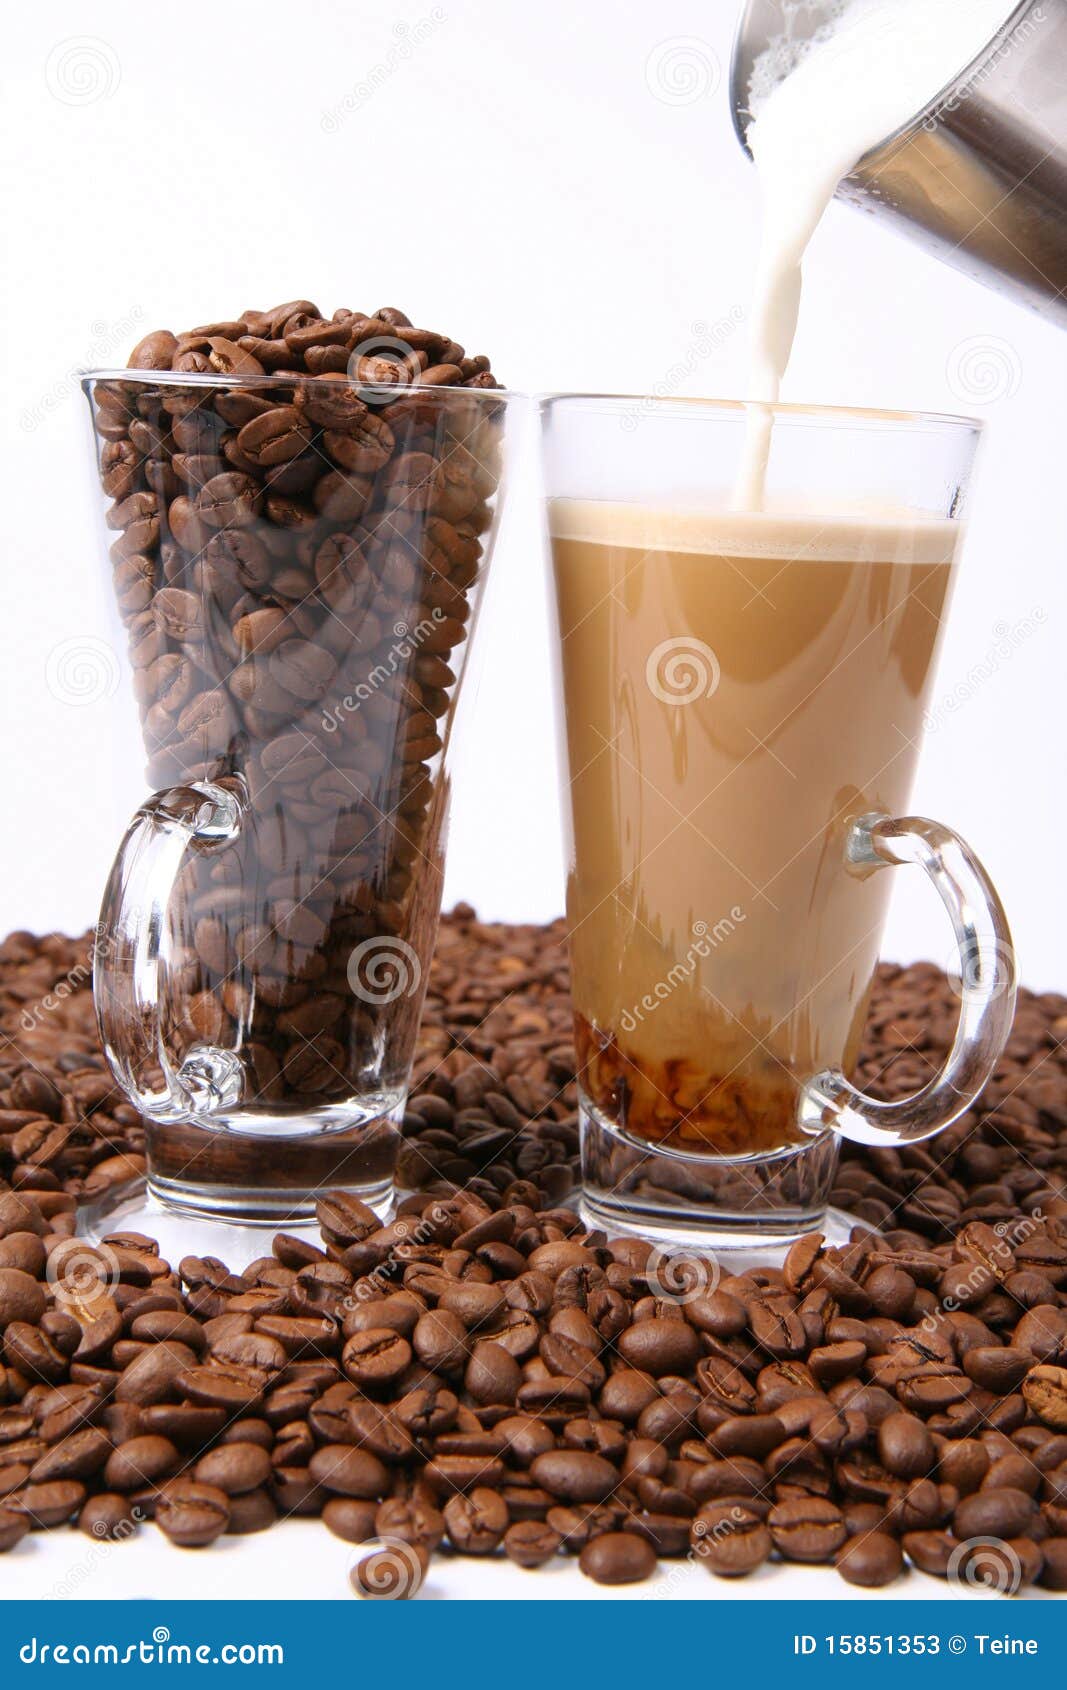 making of caffe latte